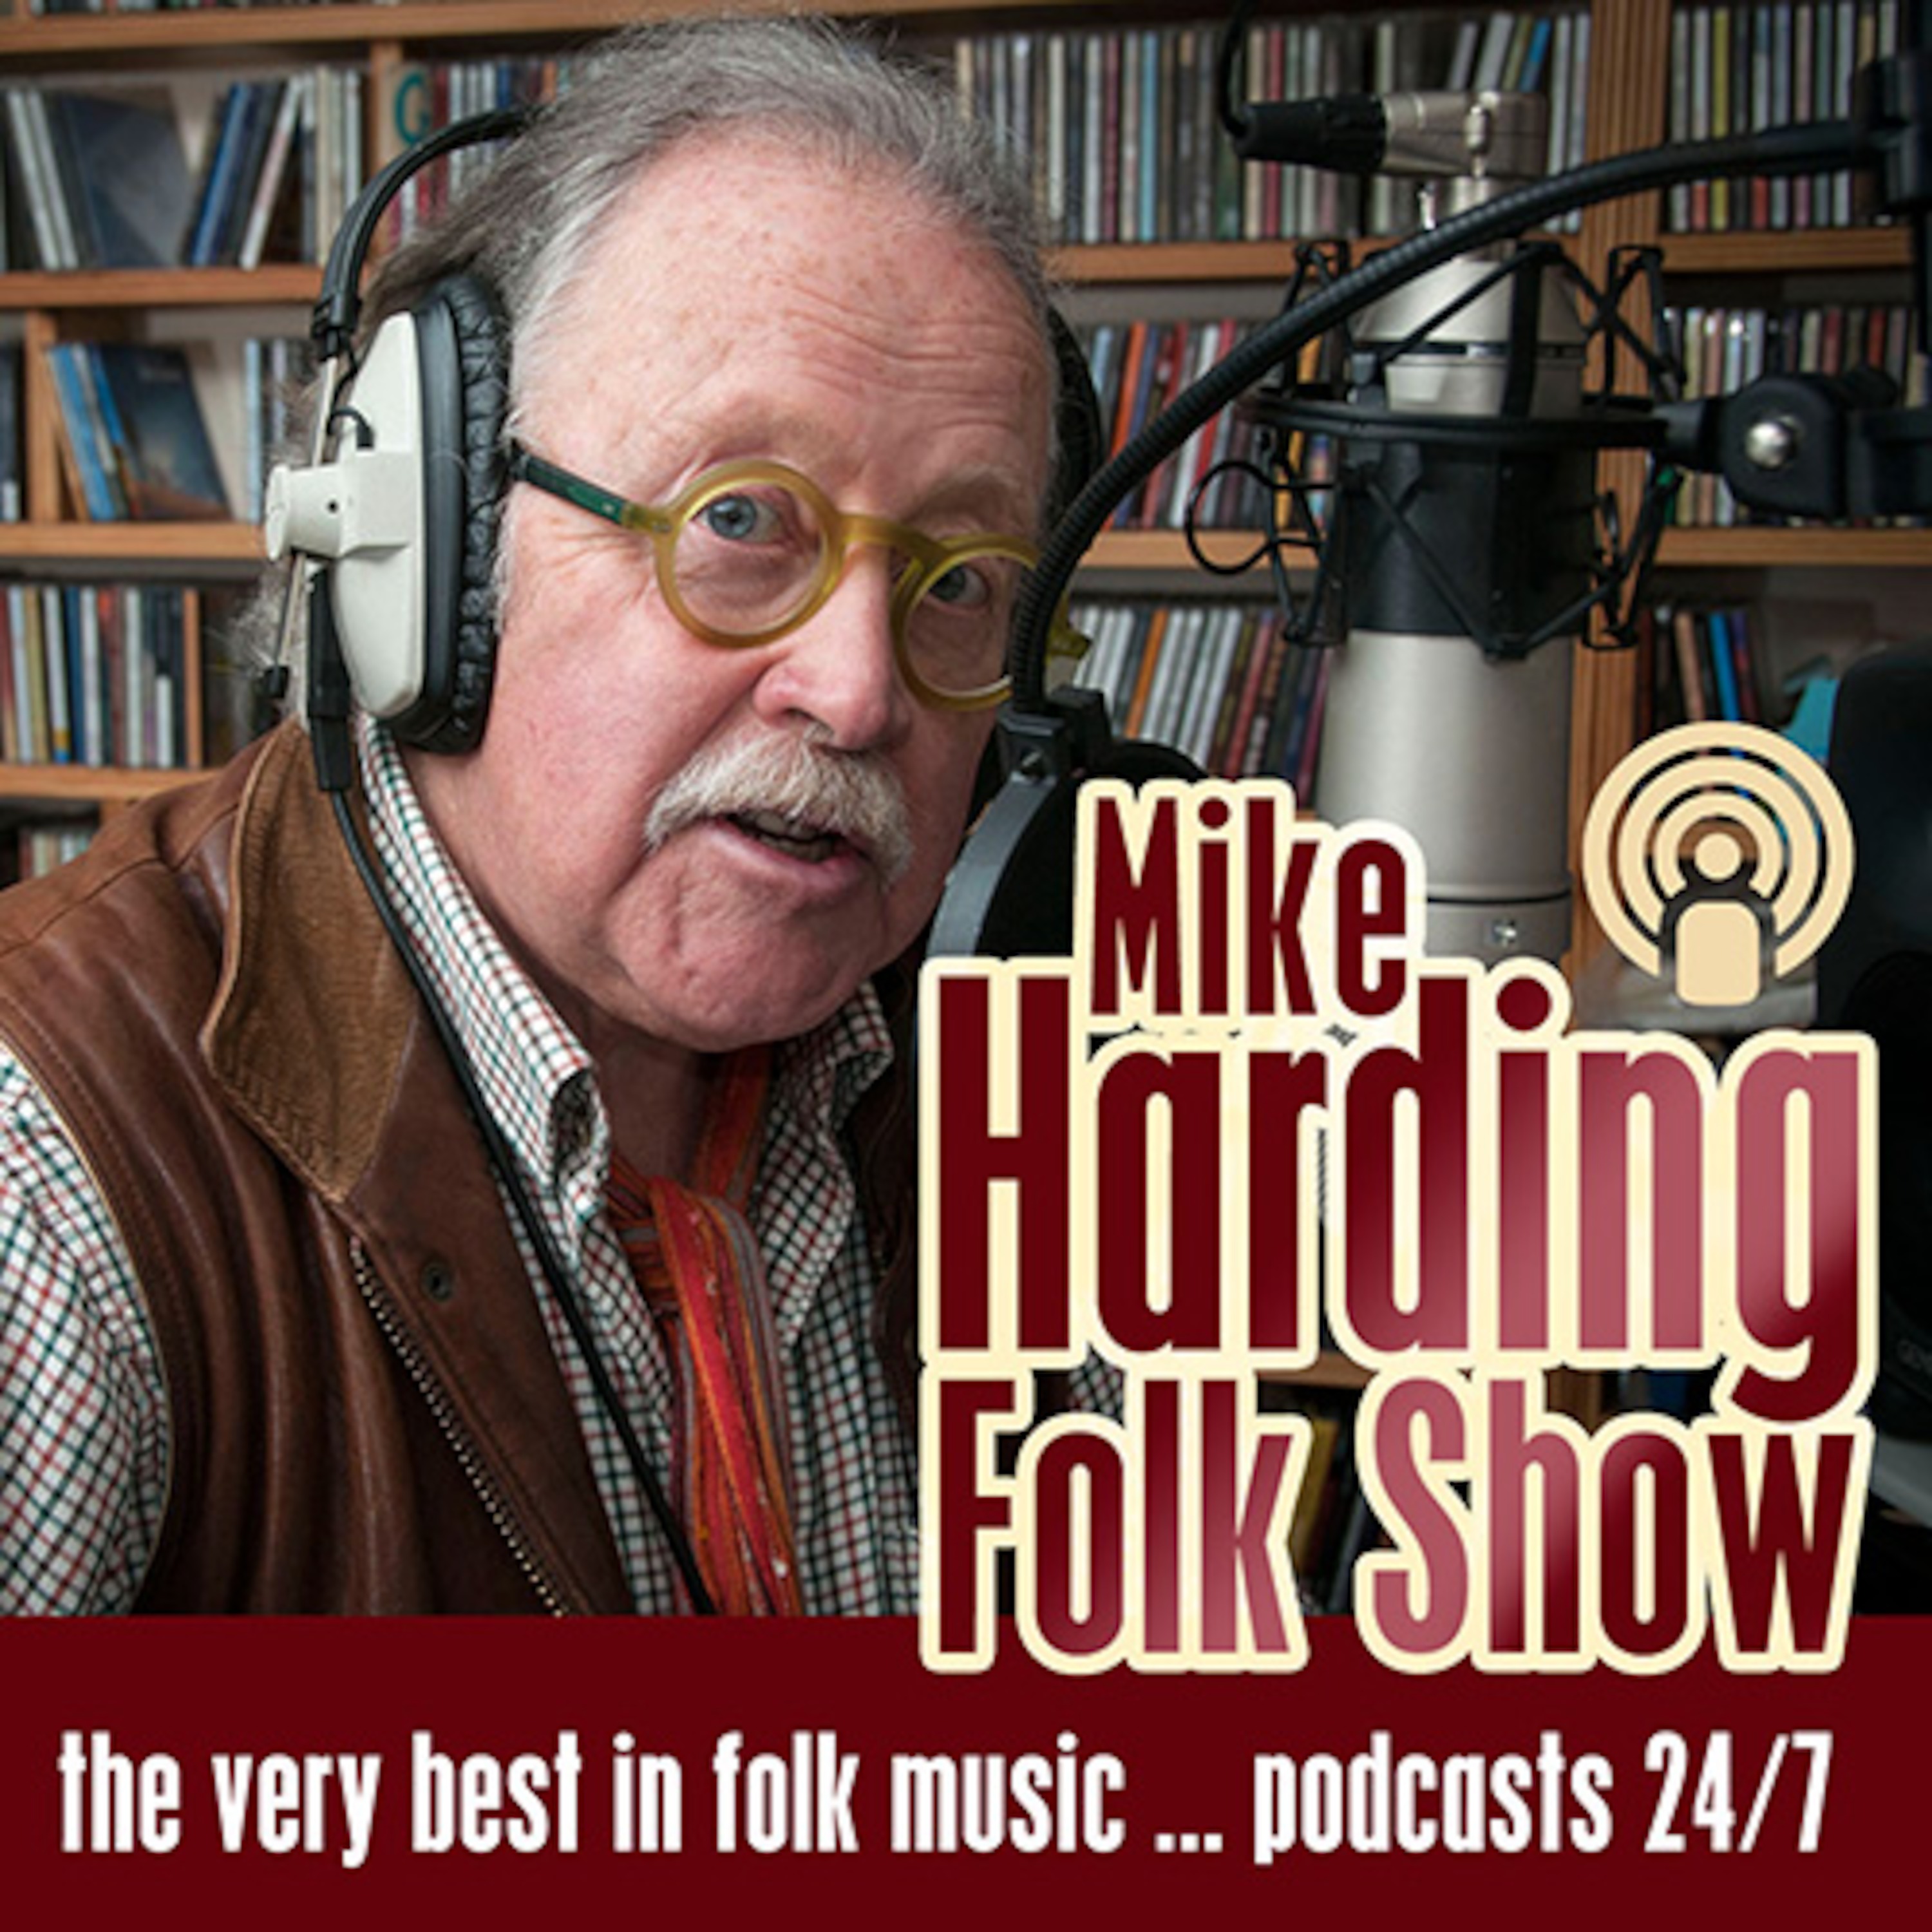 Mike Harding Folk Show 51